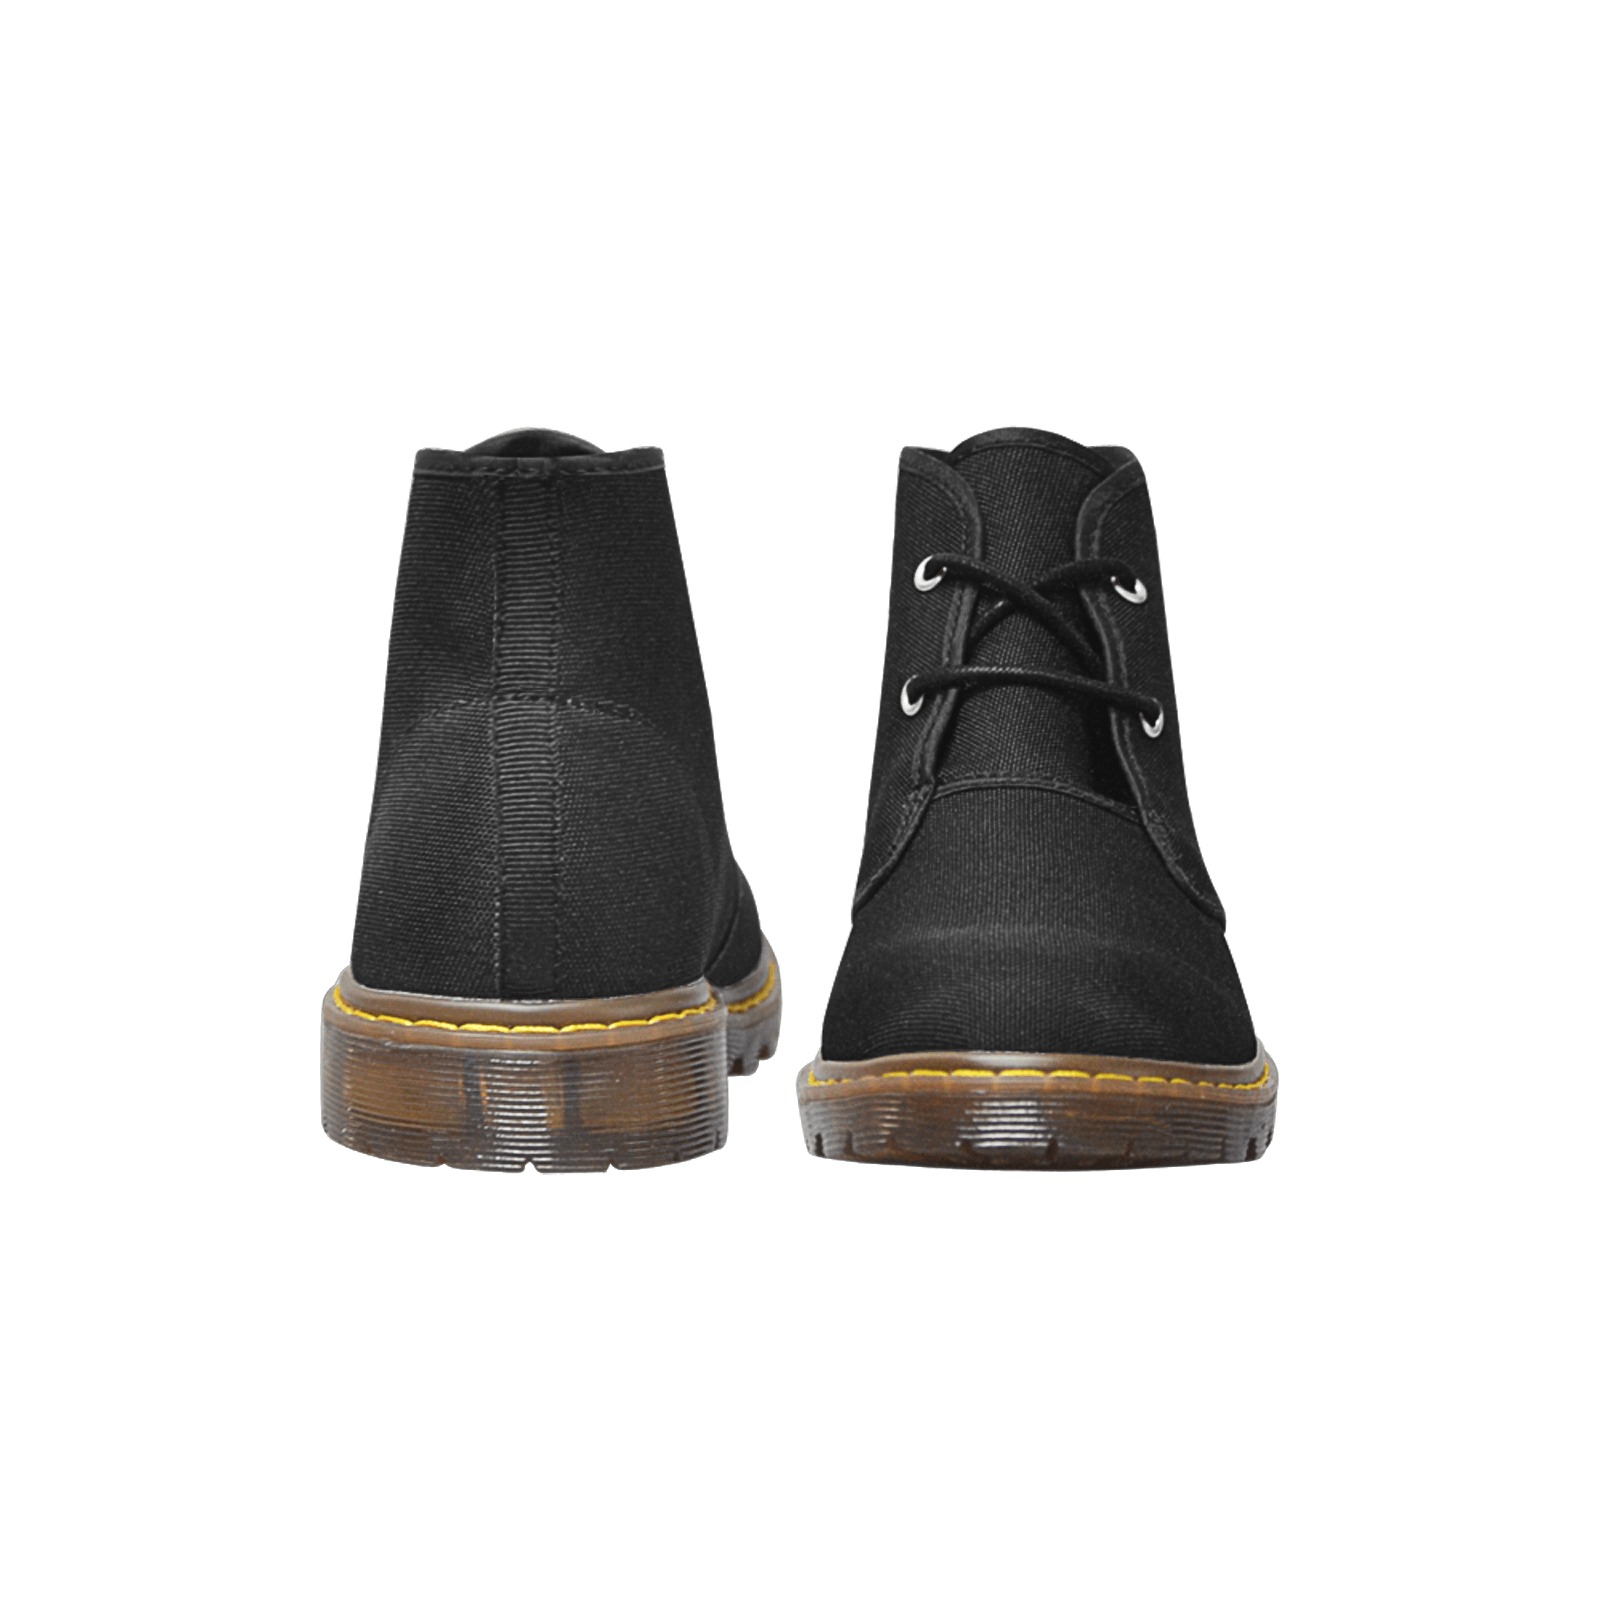 canvas black Men's Canvas Chukka Boots (Model 2402-1)